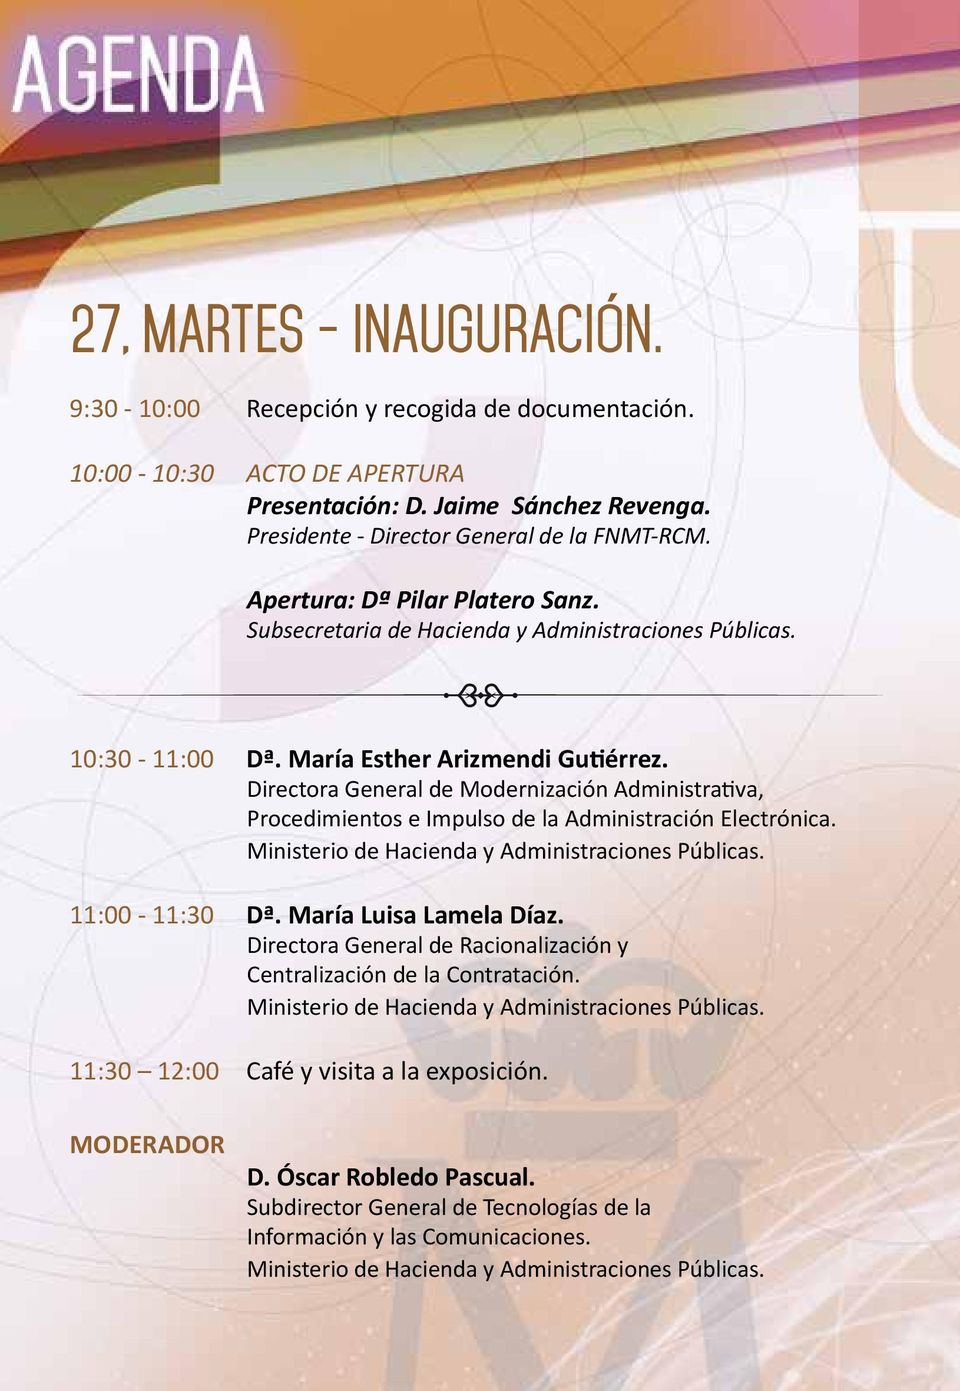 María Esther Arizmendi Gutiérrez. Directora General de Modernización Administrativa, Procedimientos e Impulso de la Administración Electrónica. 11:00-11:30 Dª.